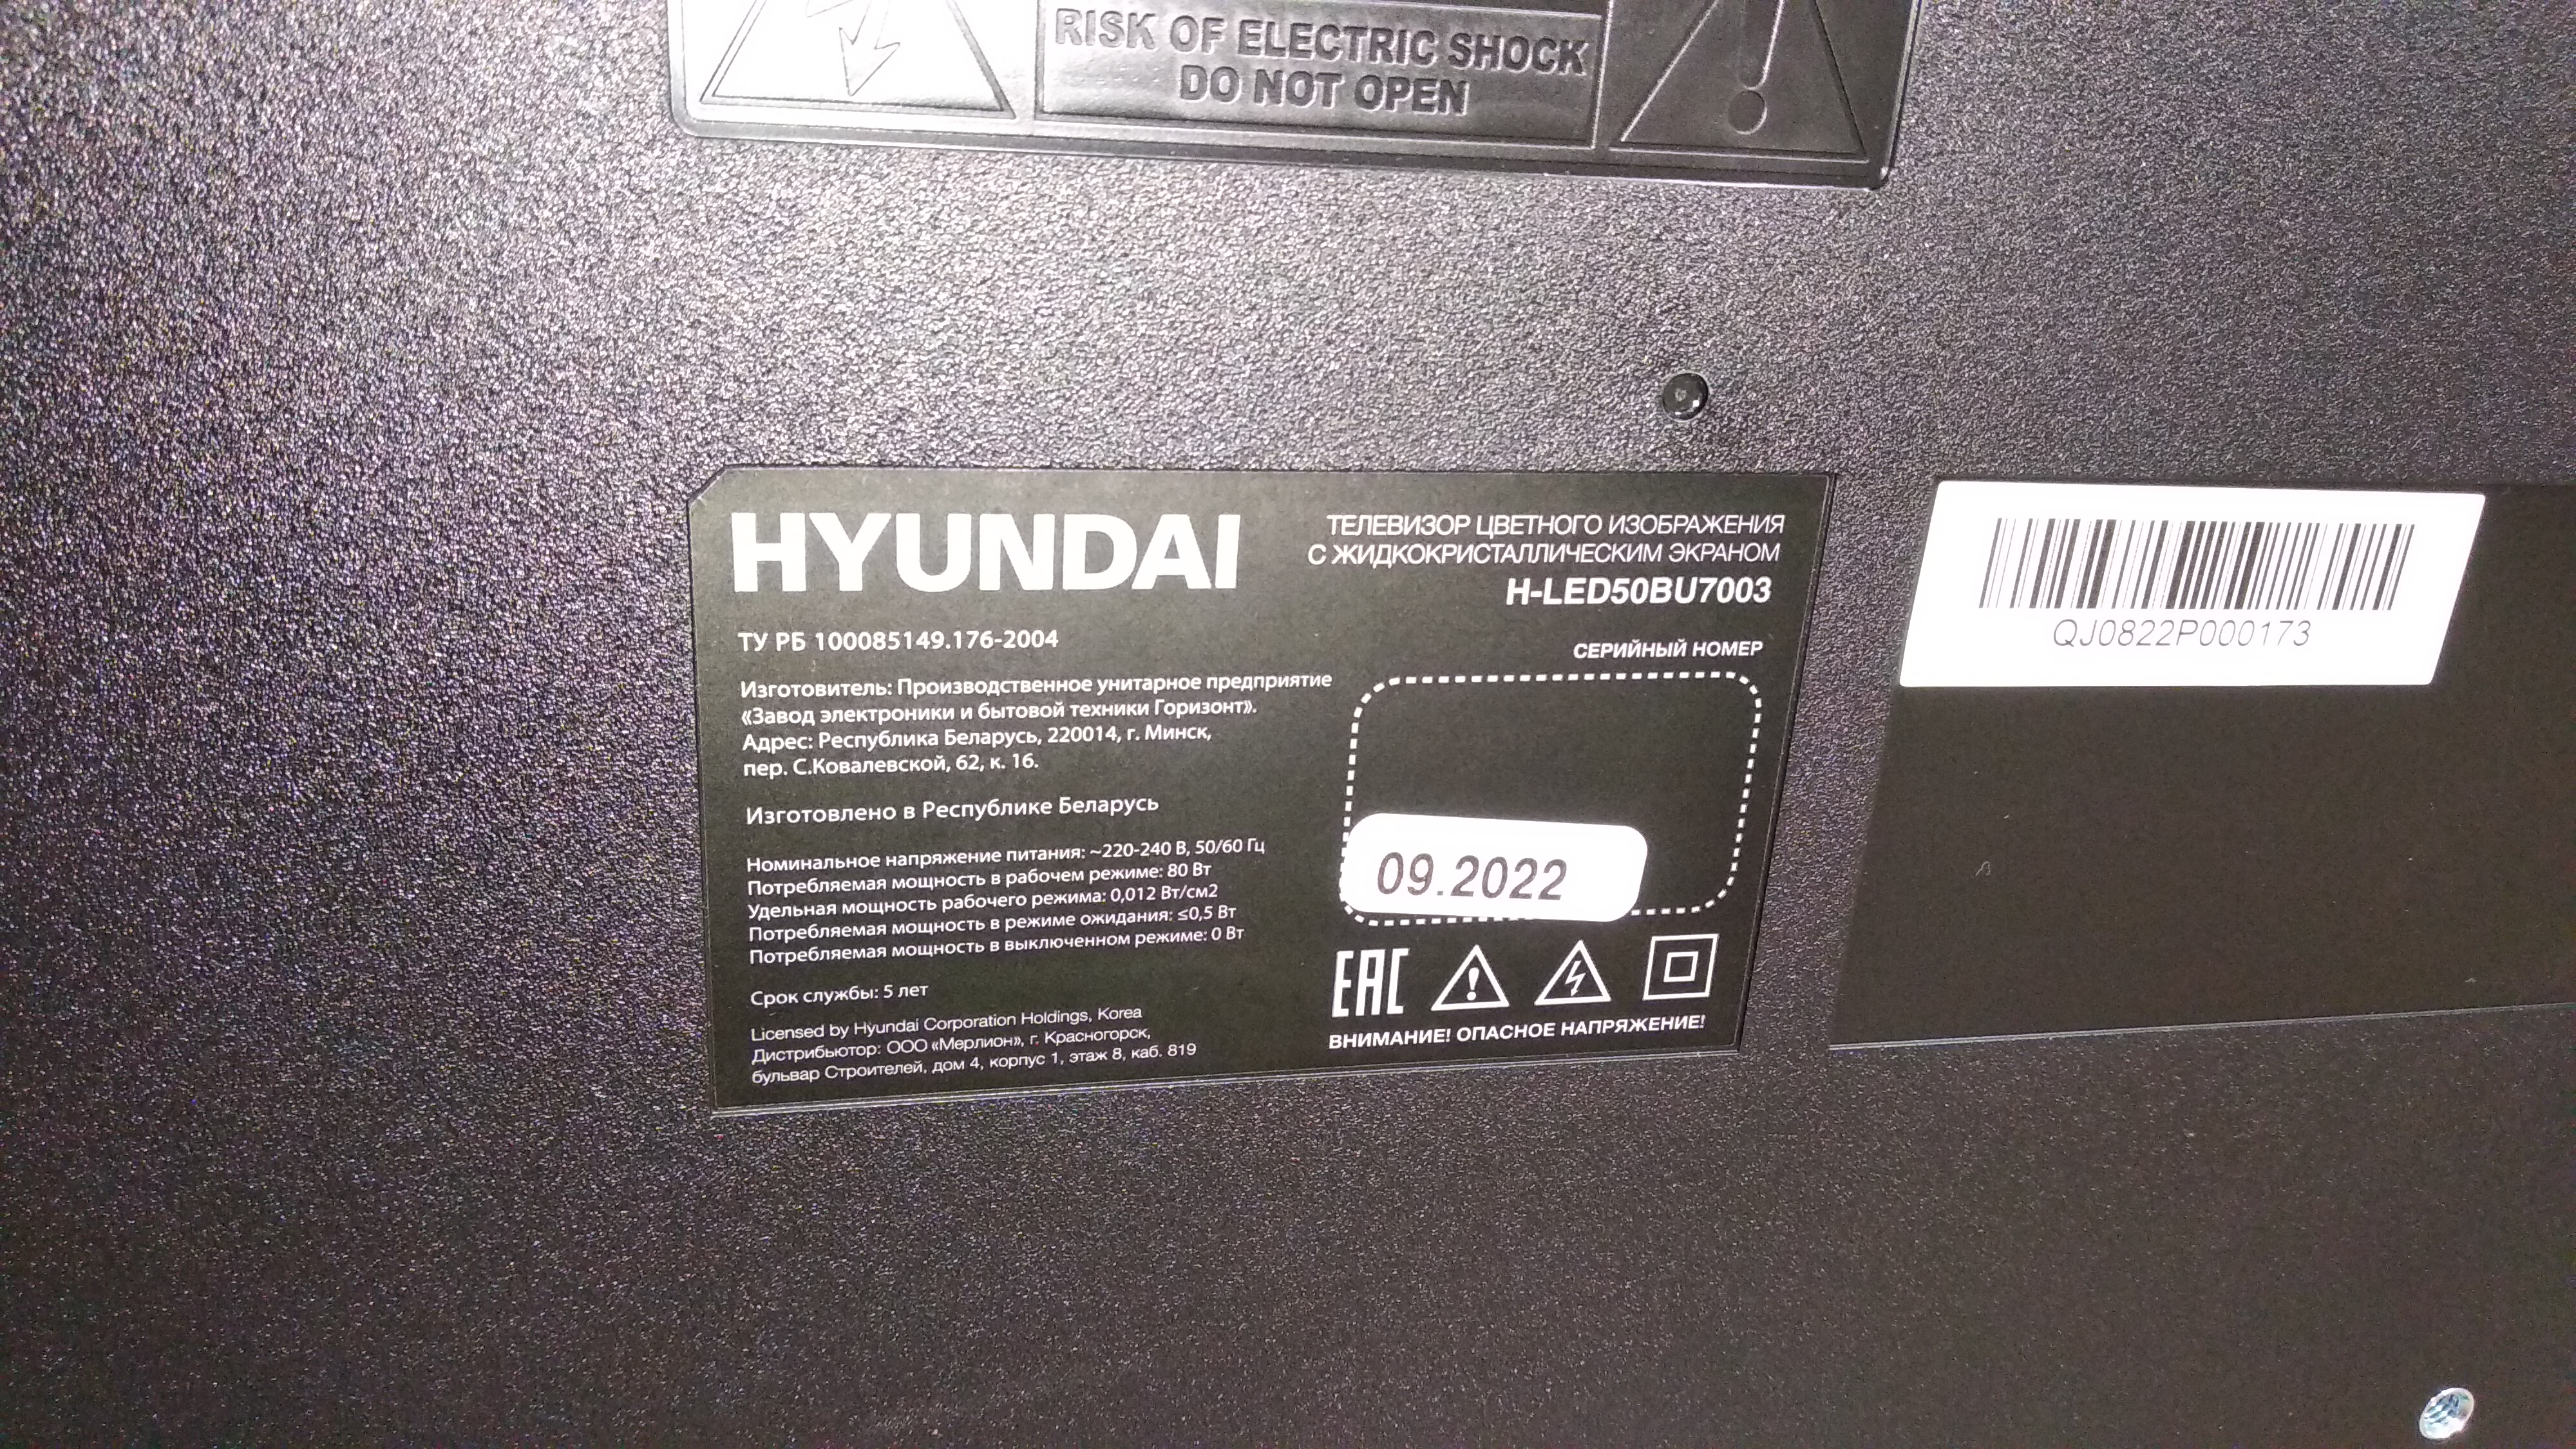 Телевизор Hyundai 50 h-led50bu7003 как включить Miracast. Hyundai h-led50bu7003 50 угол обзора фото.